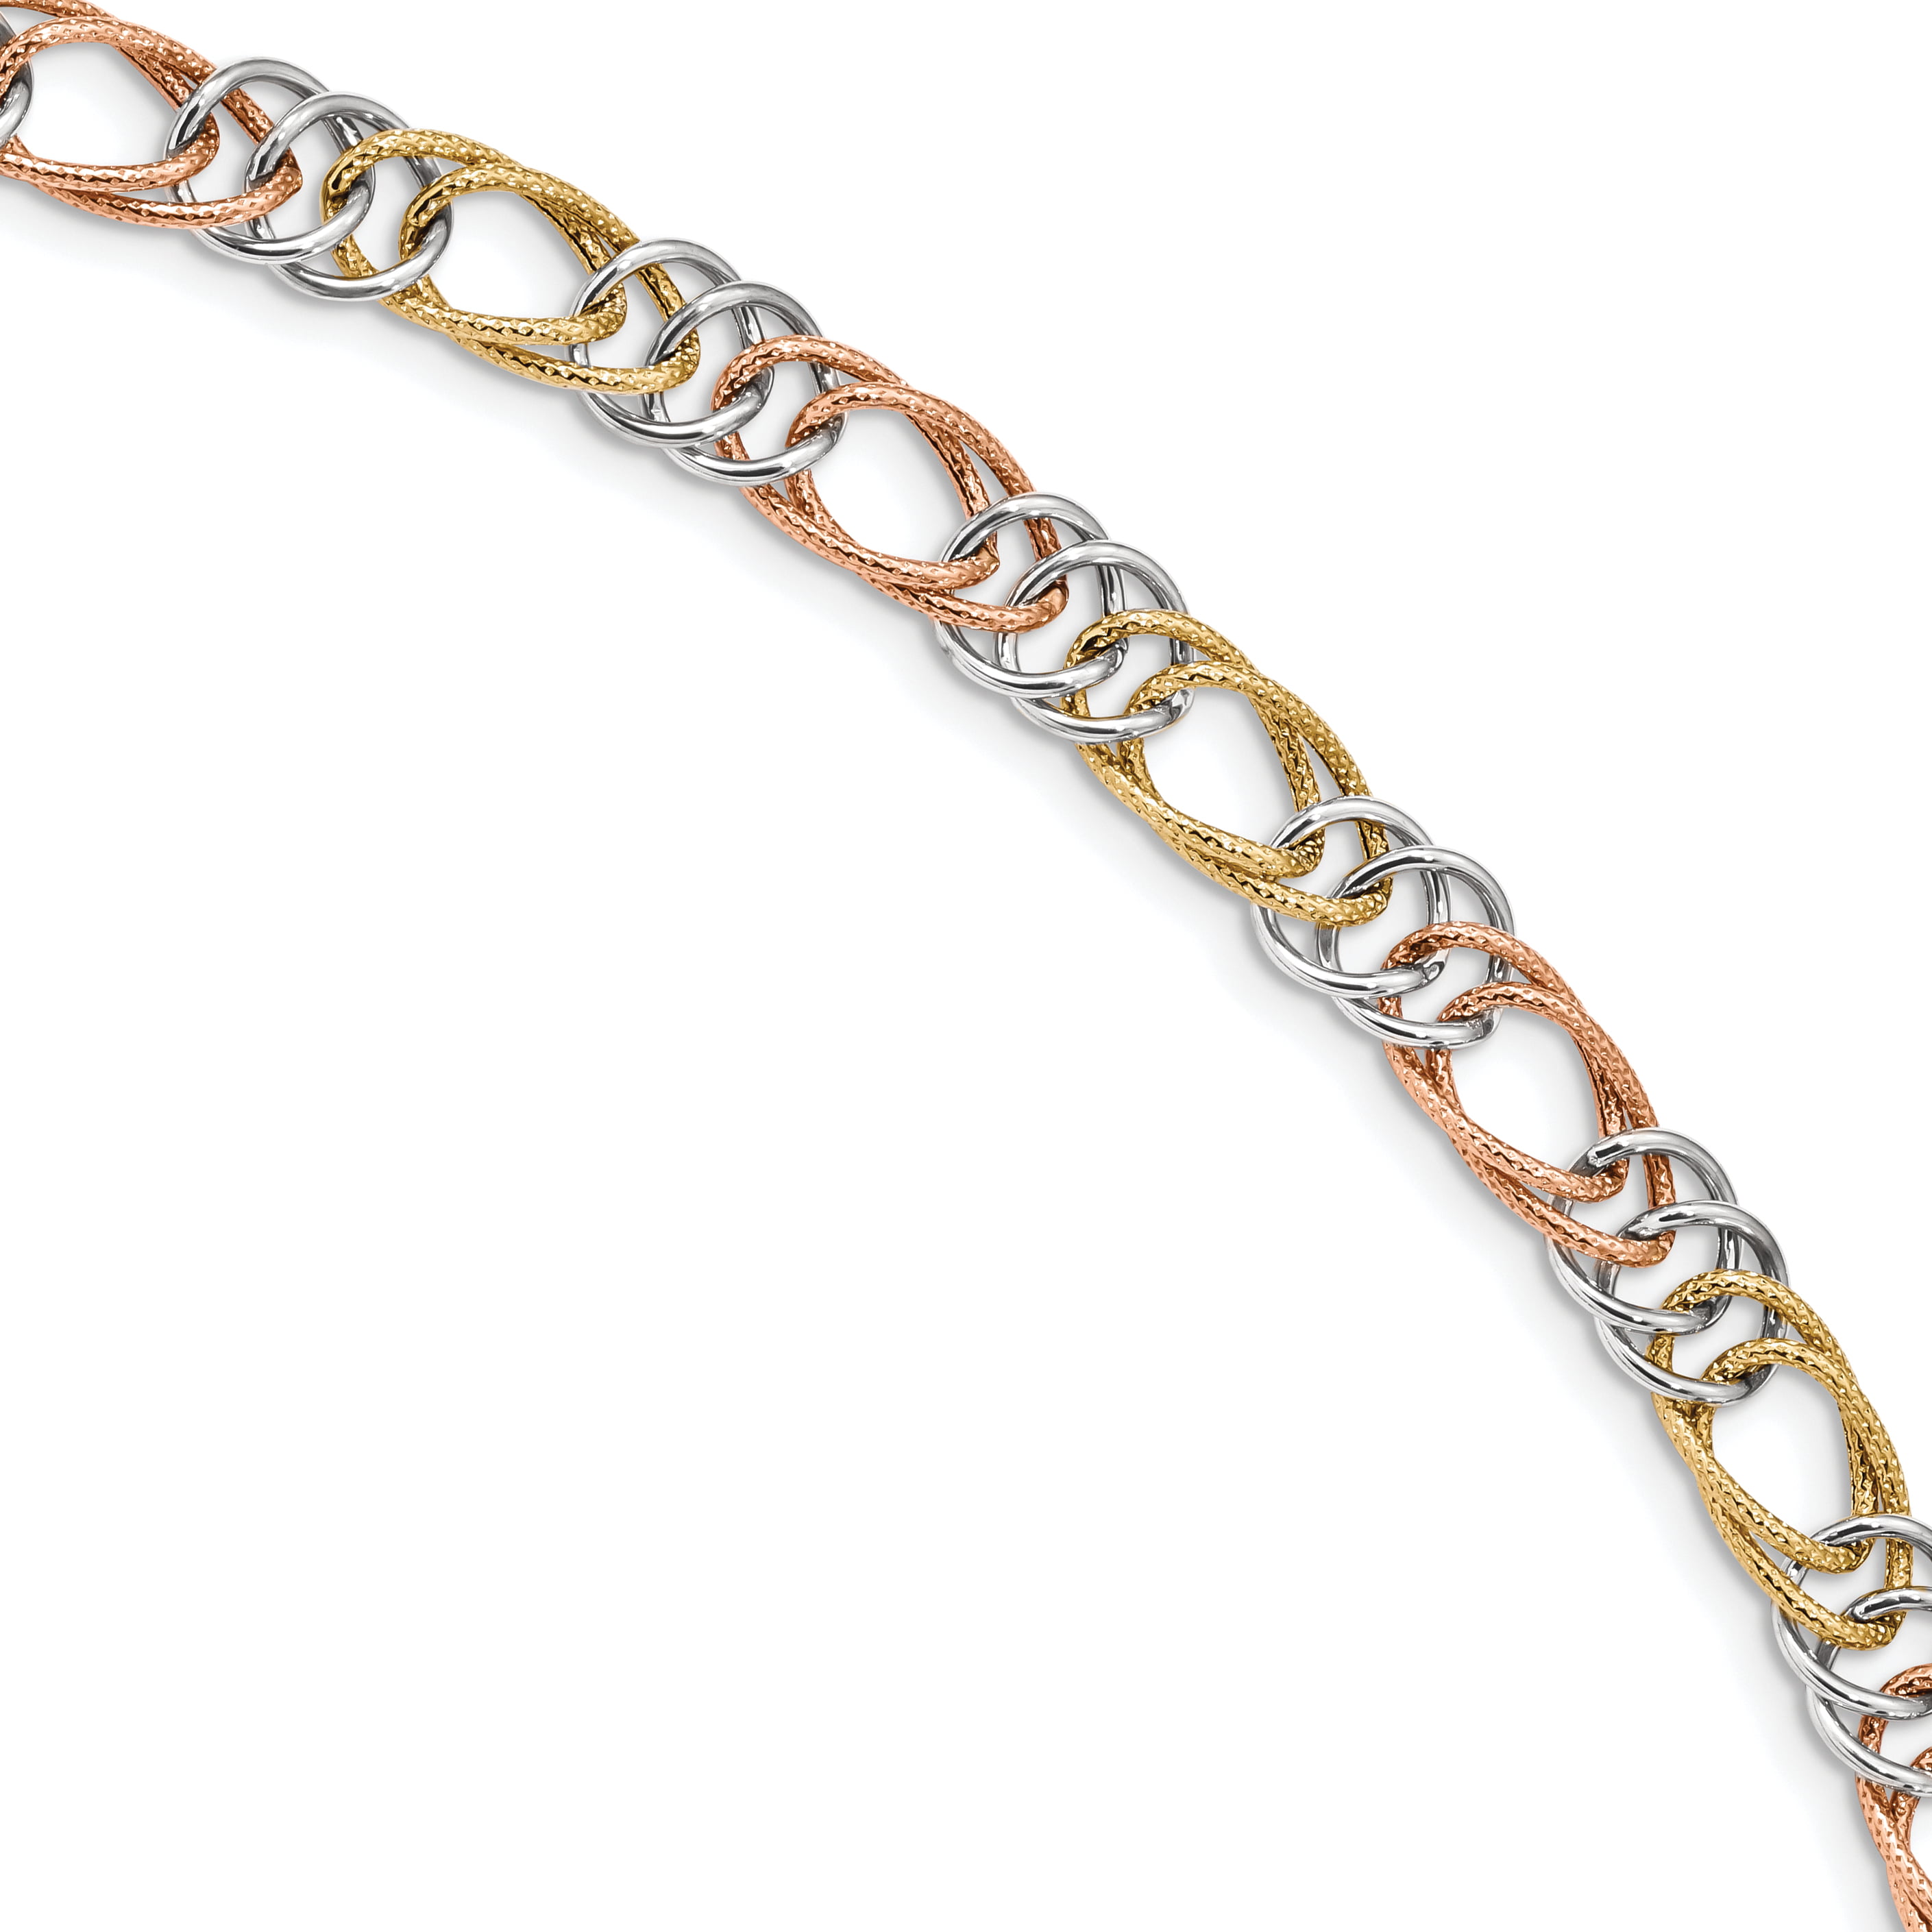 1/20 12K GF Double Link Gold Bracelet With Guard Chain | Etsy UK | Gold  bracelet, Bracelets, Necklace earring set